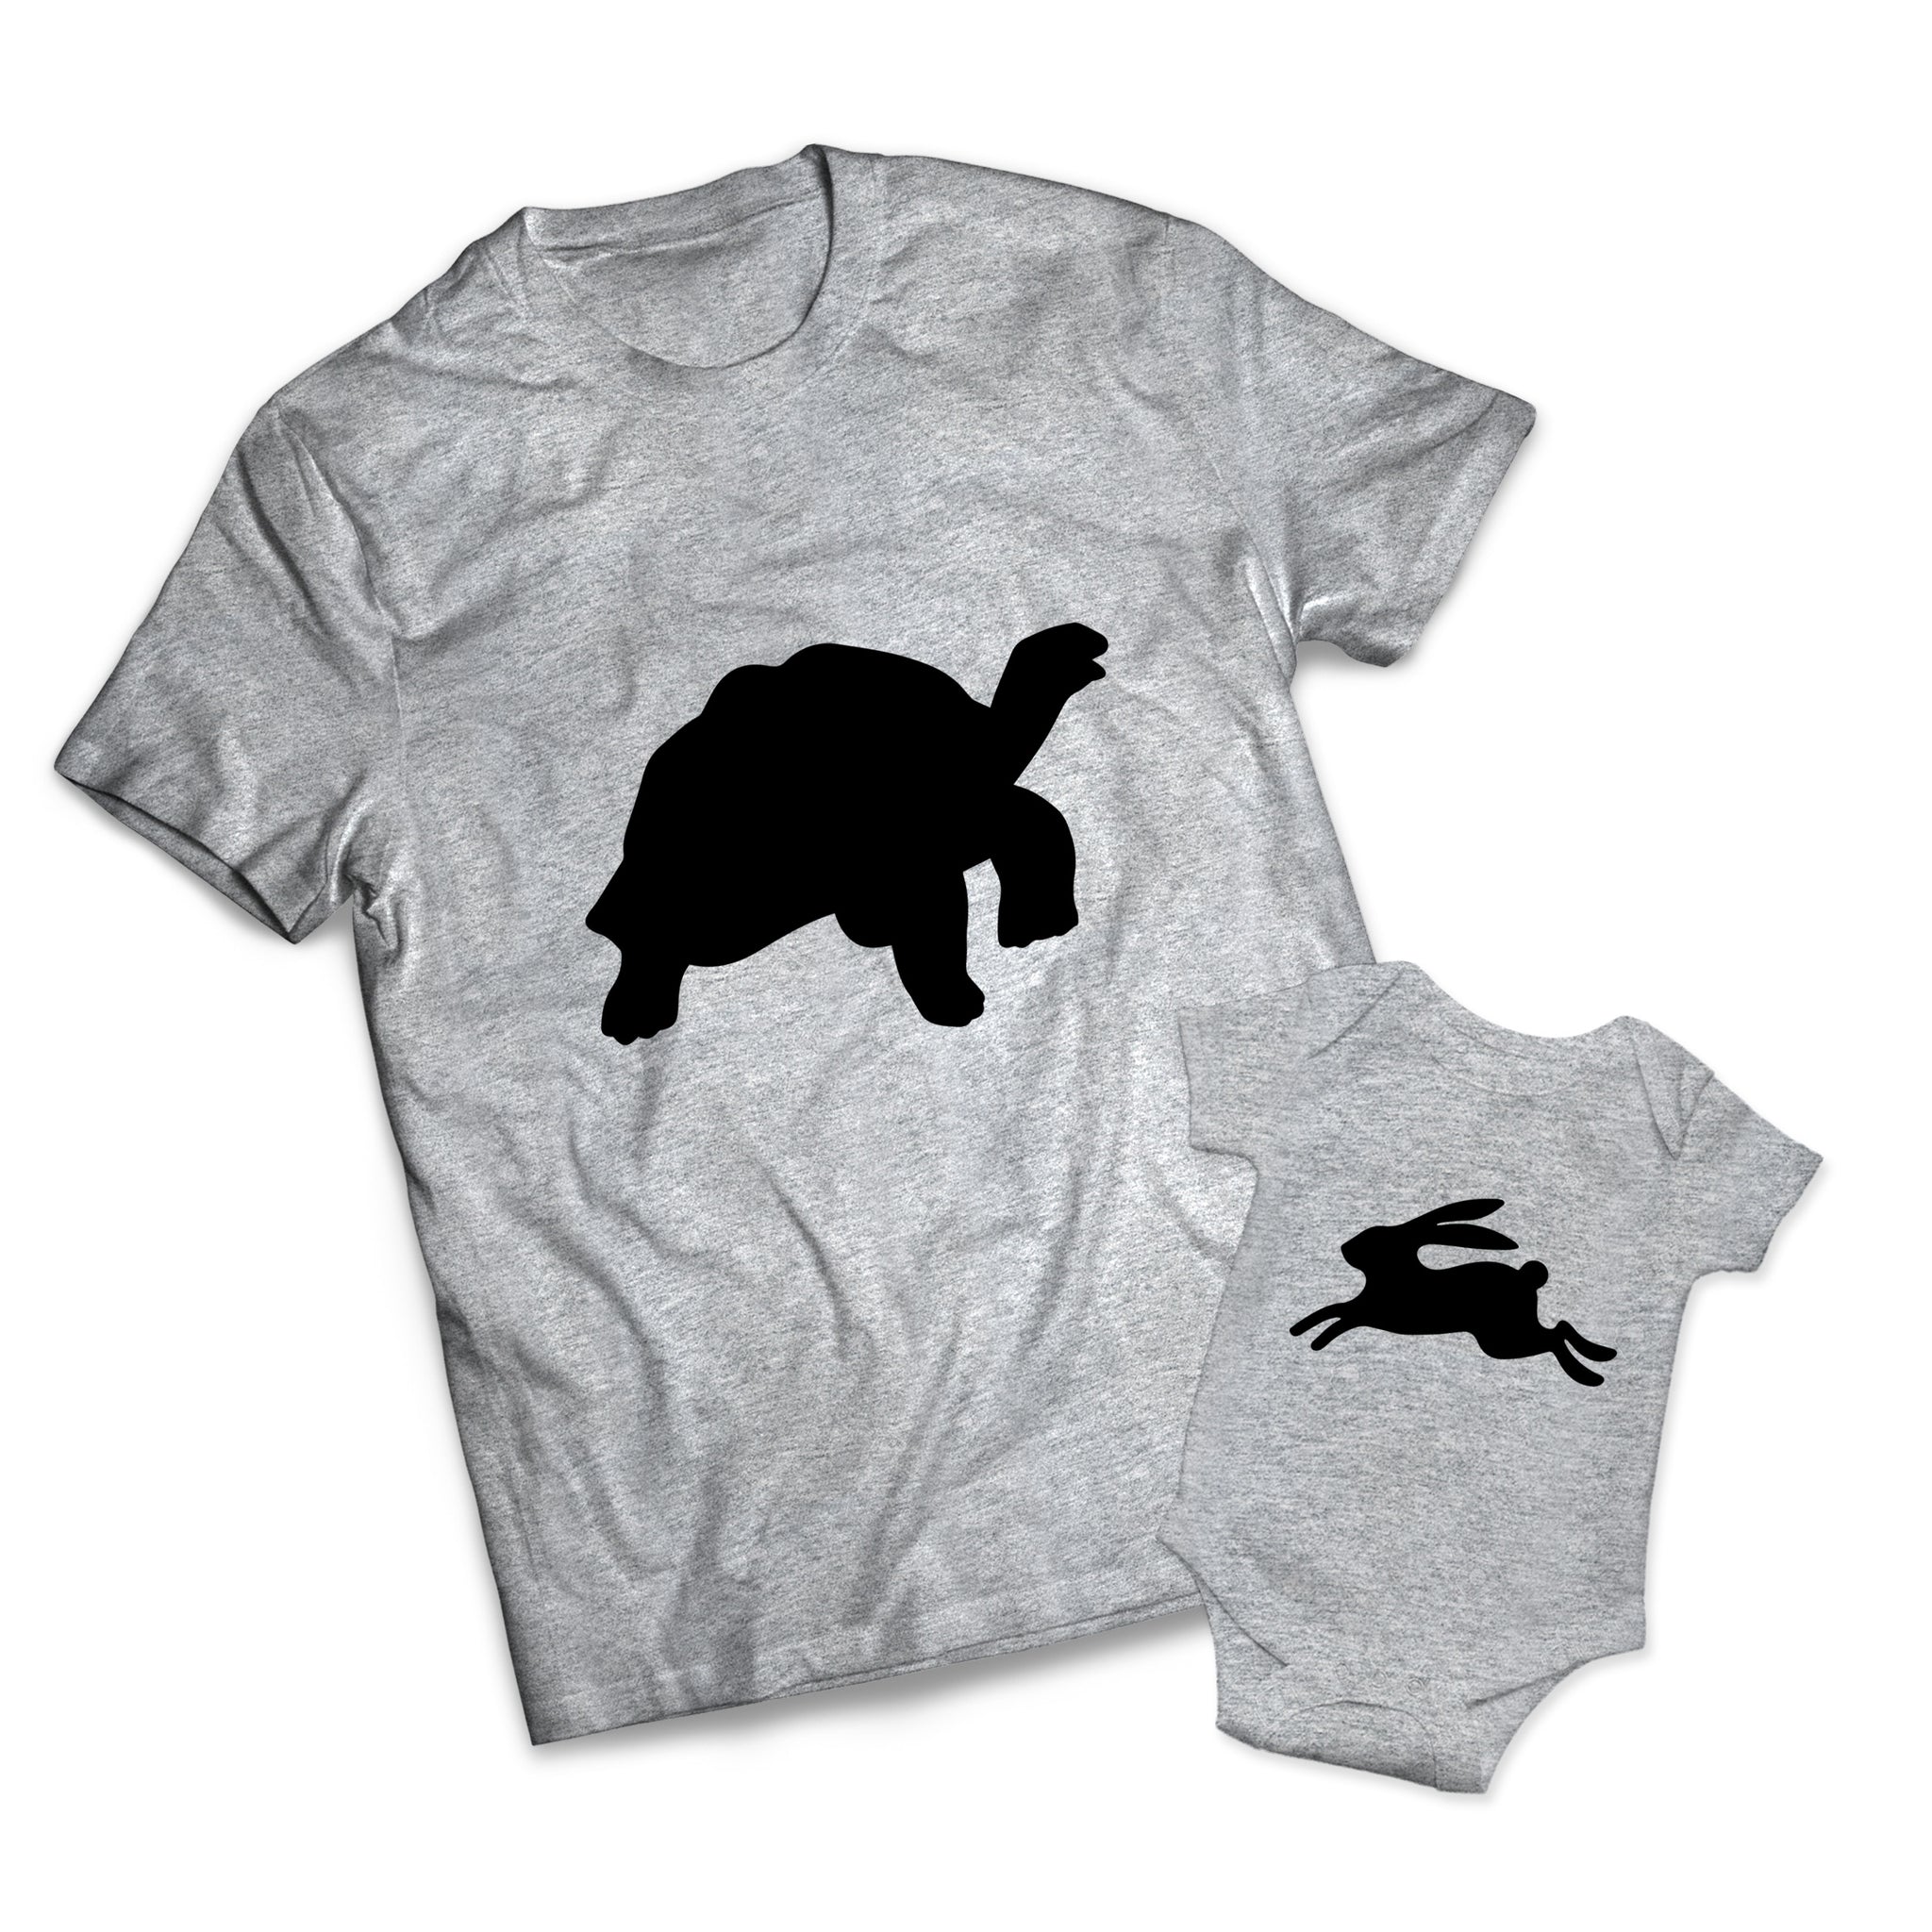 Tortoise And Hare Set - Dads -  Matching Shirts